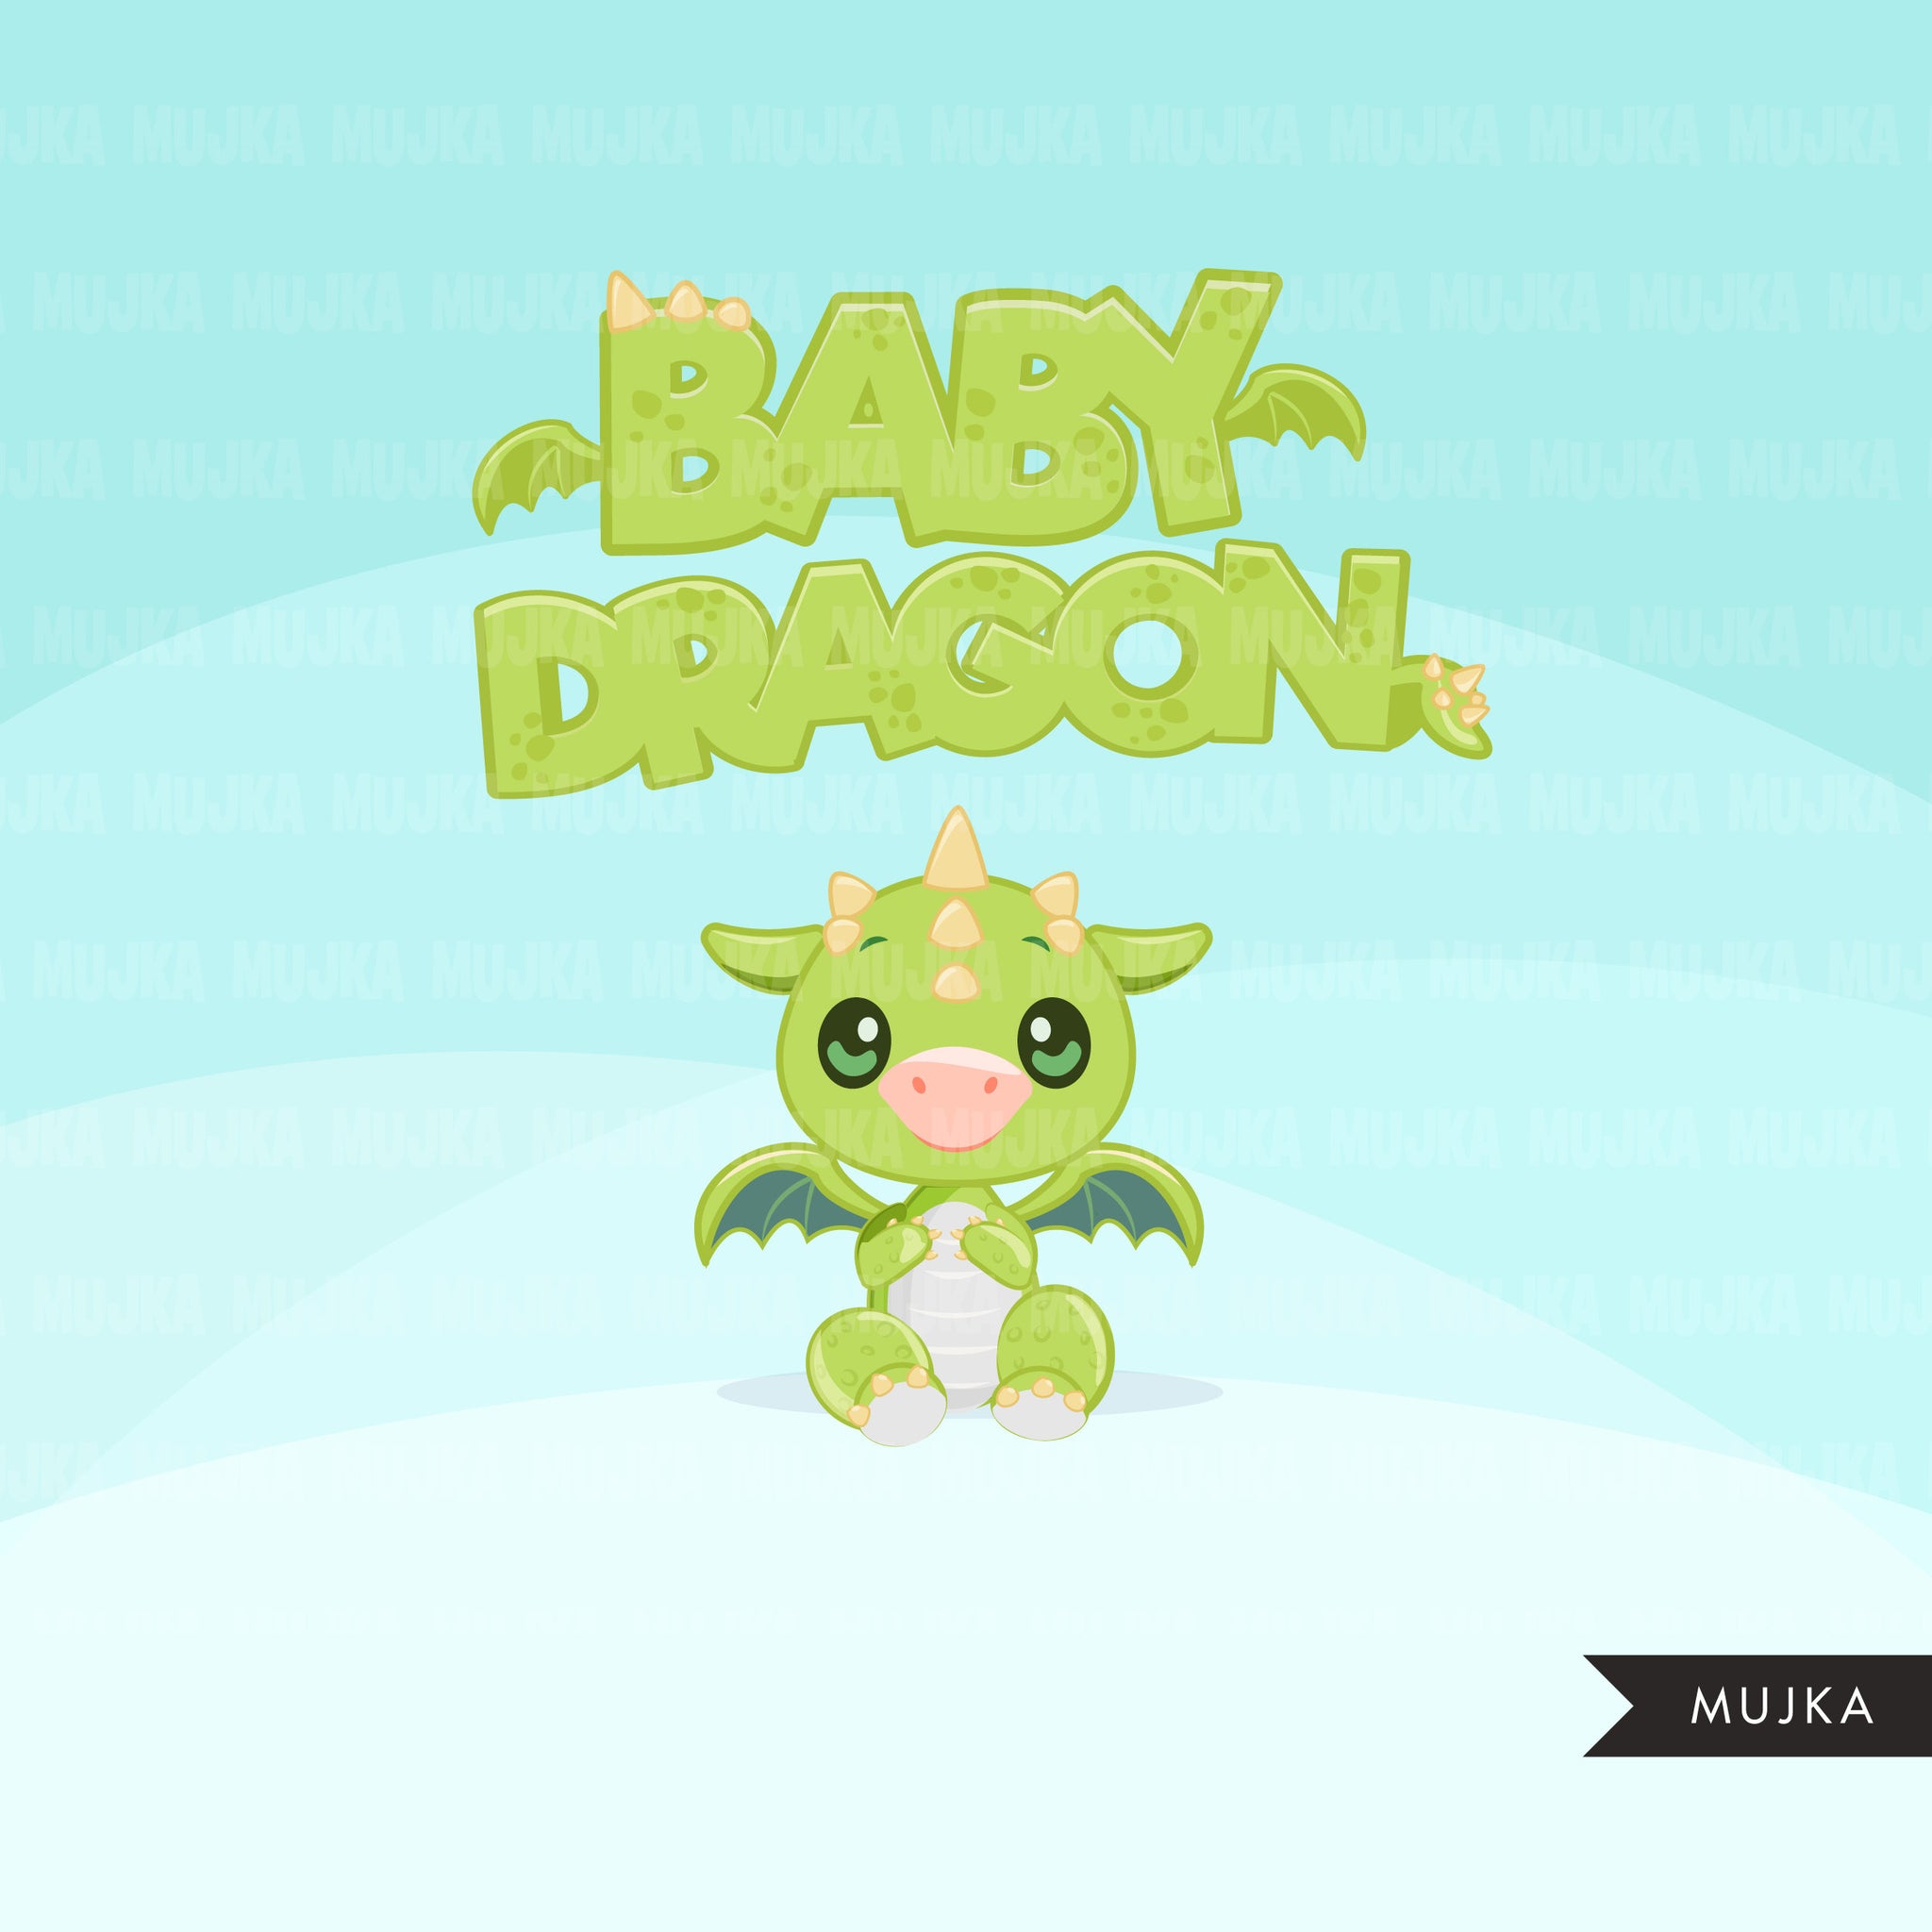 Baby Dragon clipart, green animal